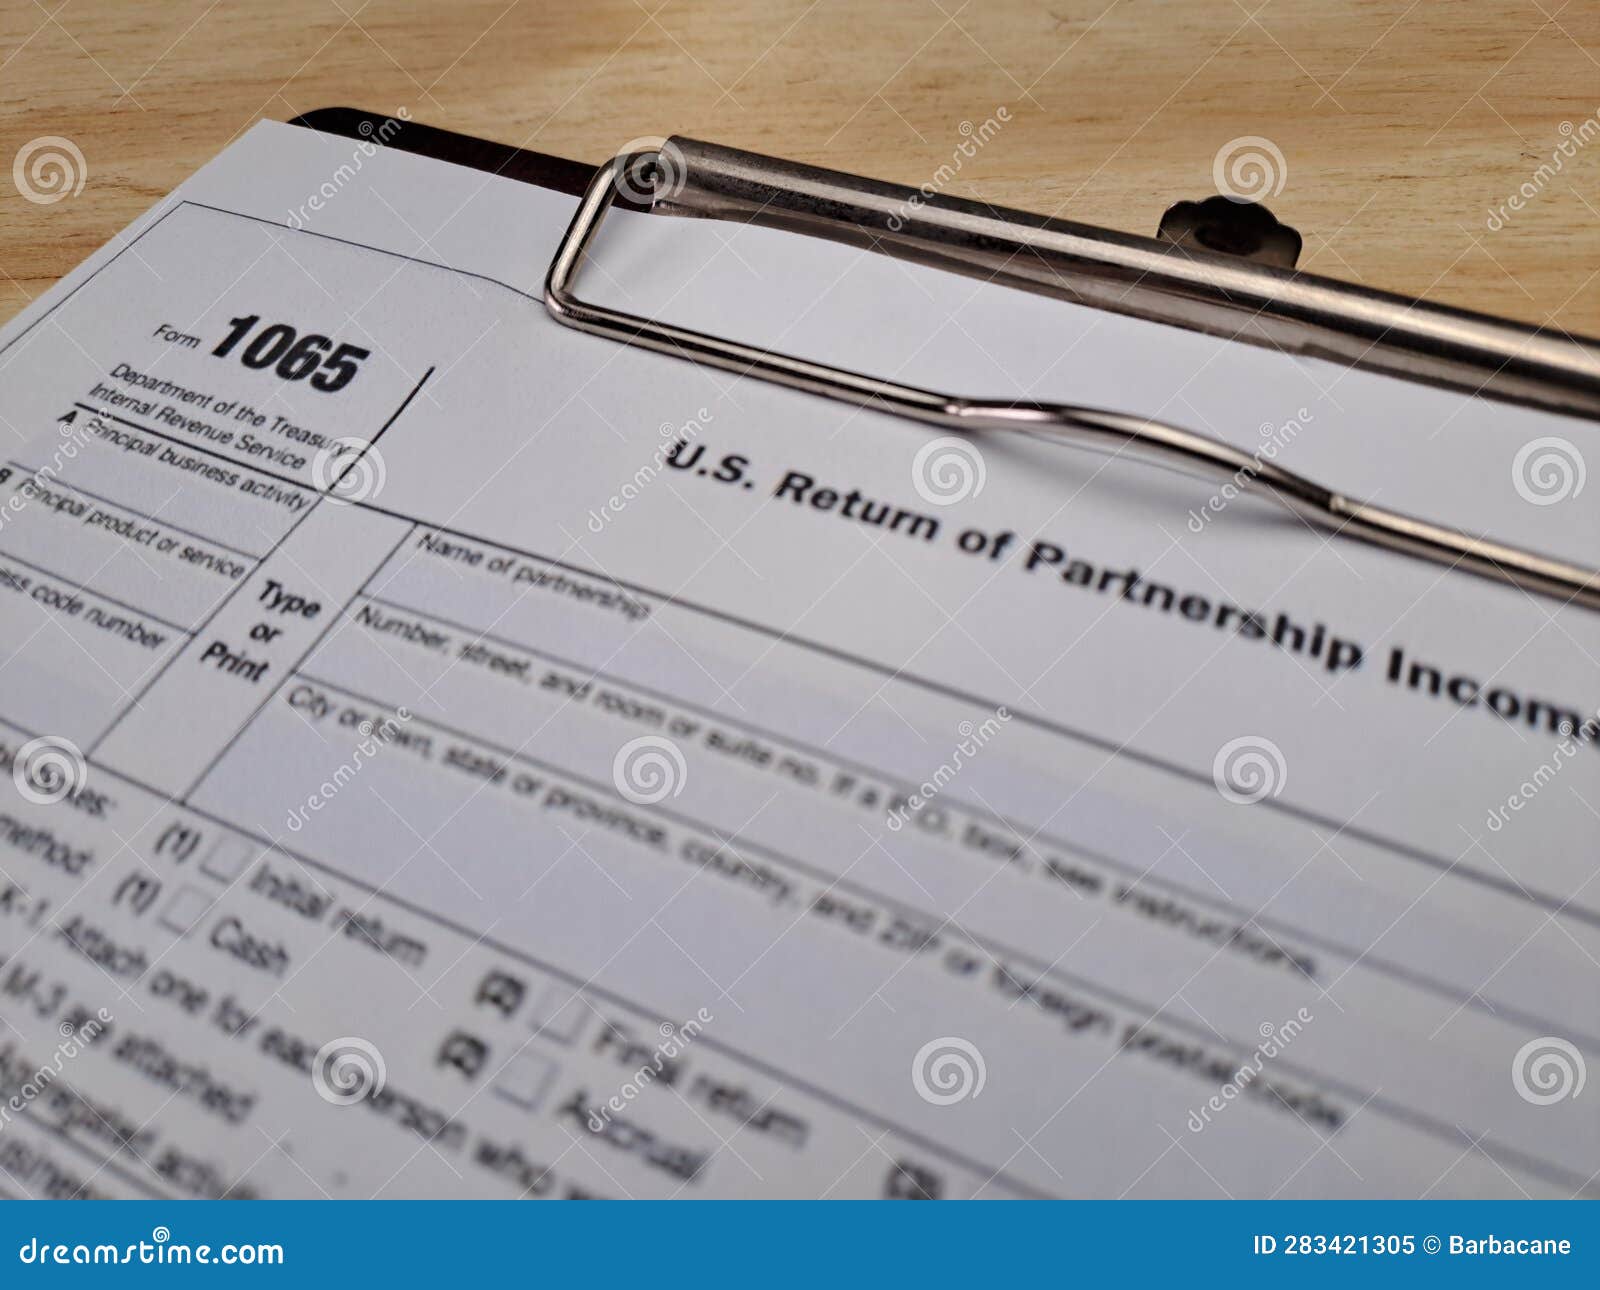 tax 1065 american income form, u.s. return of partnership income